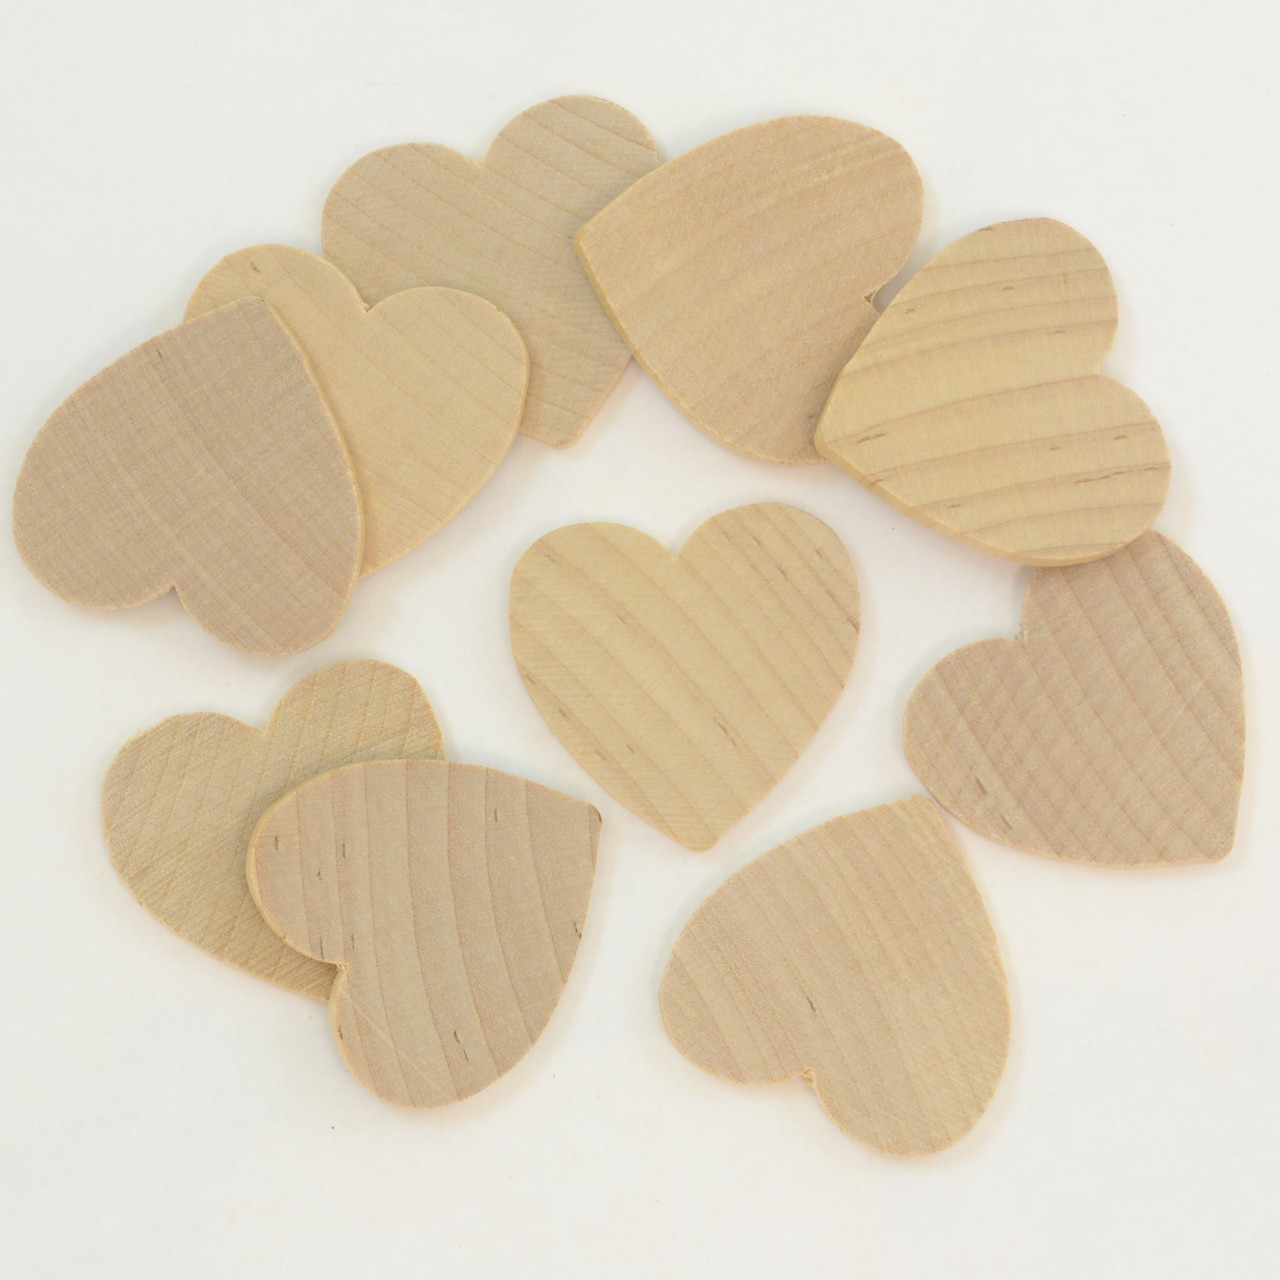 Hardwood Heart 1.25 x .125 / Package of 10